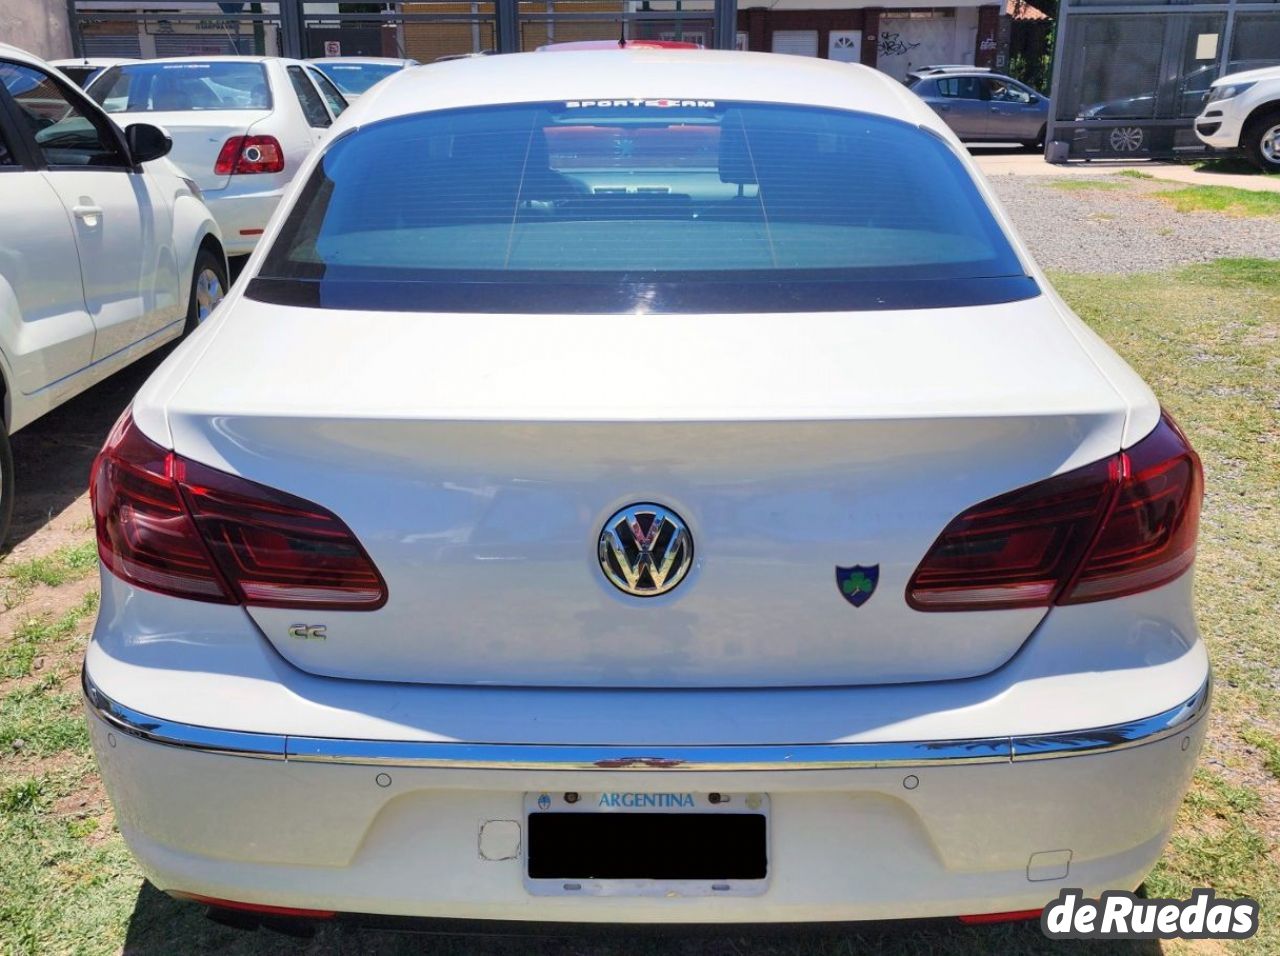 Volkswagen Passat Usado en Buenos Aires, deRuedas